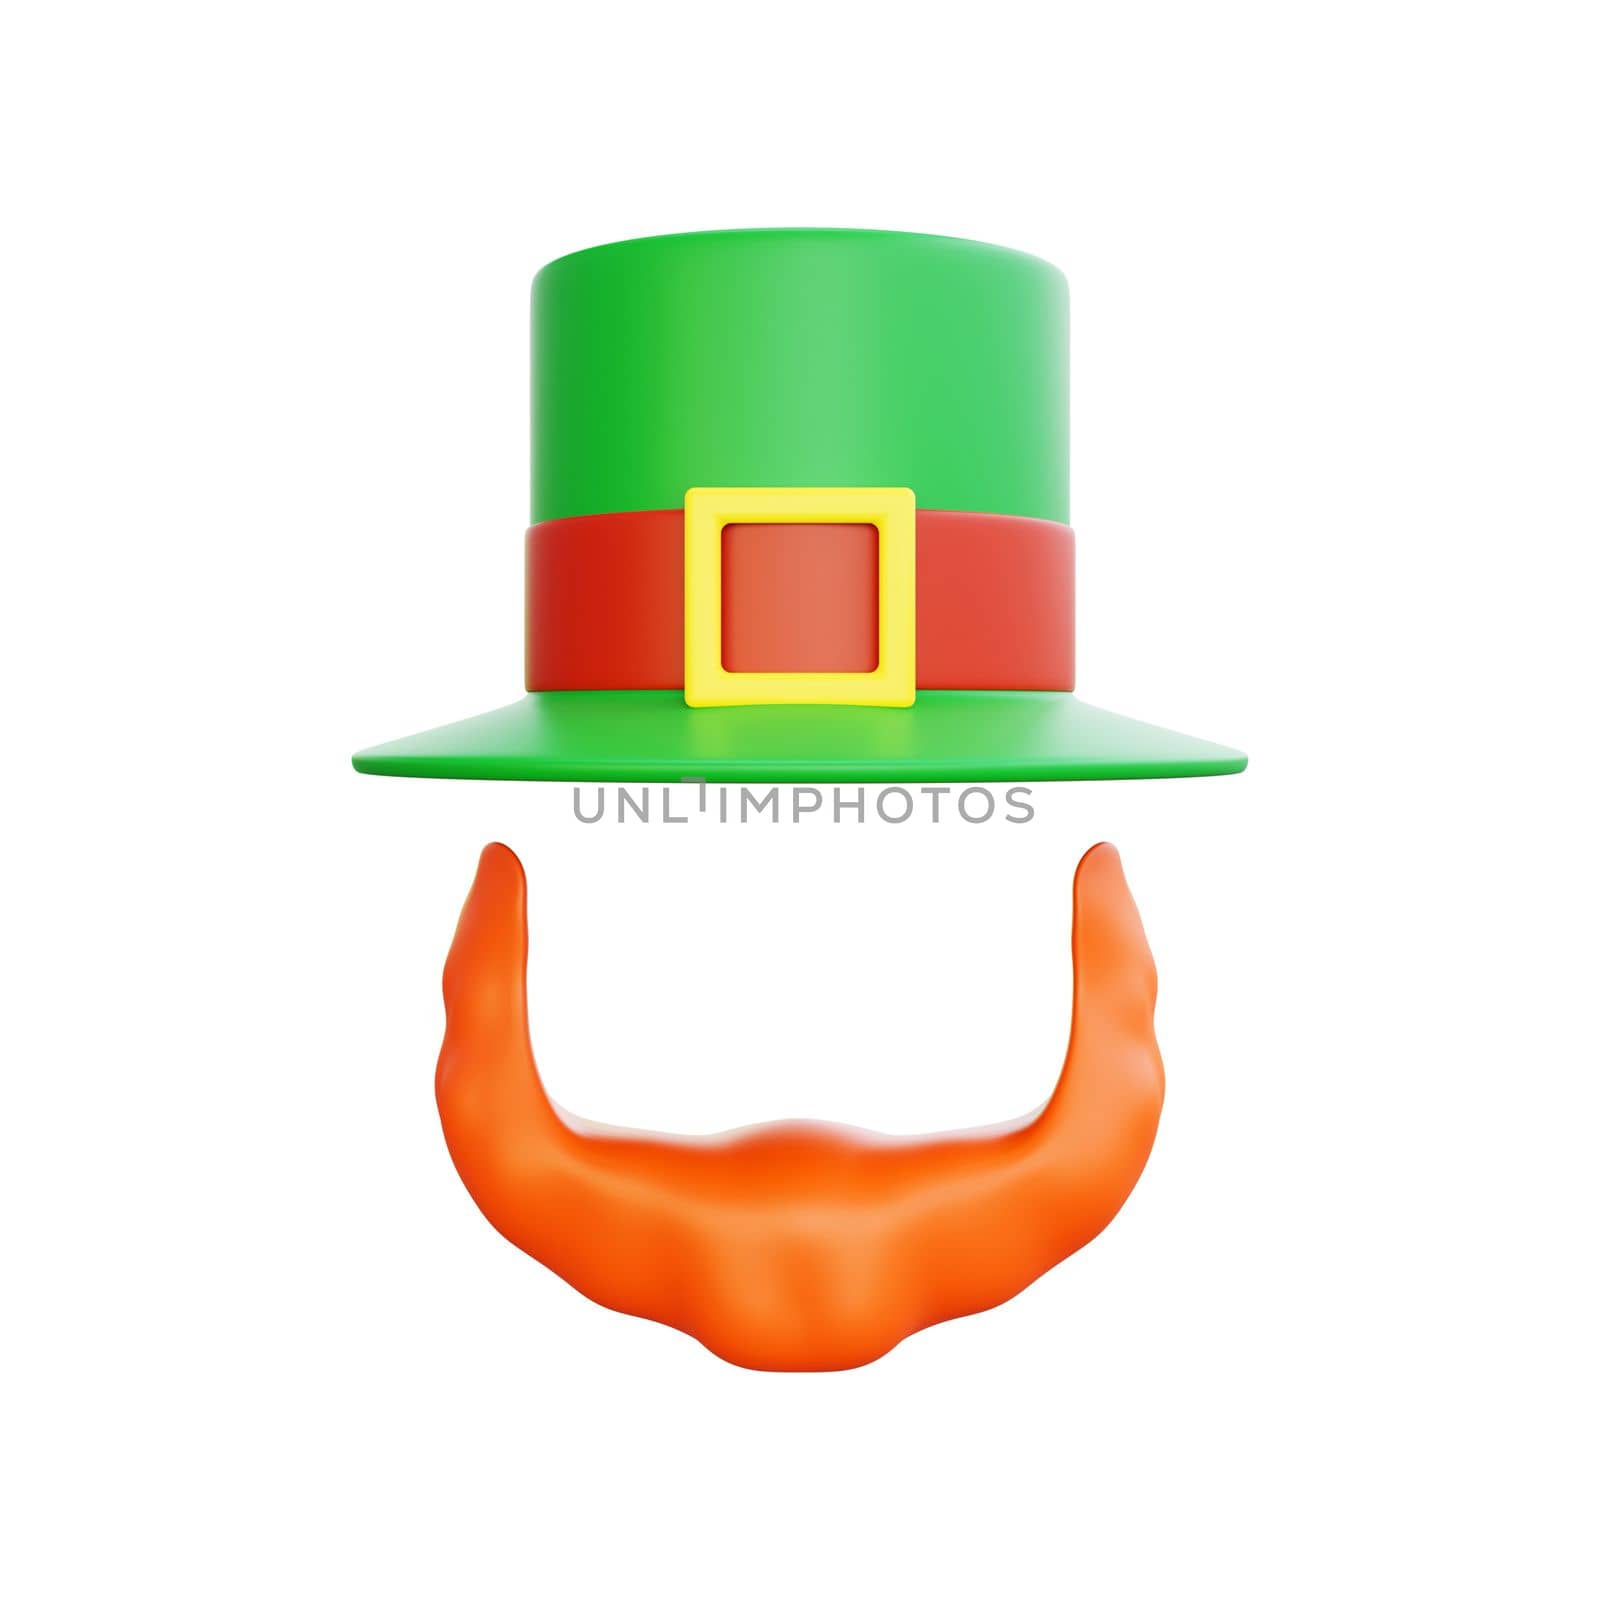 3d rendering of st patrick day mask mascot icon by Rahmat_Djayusman